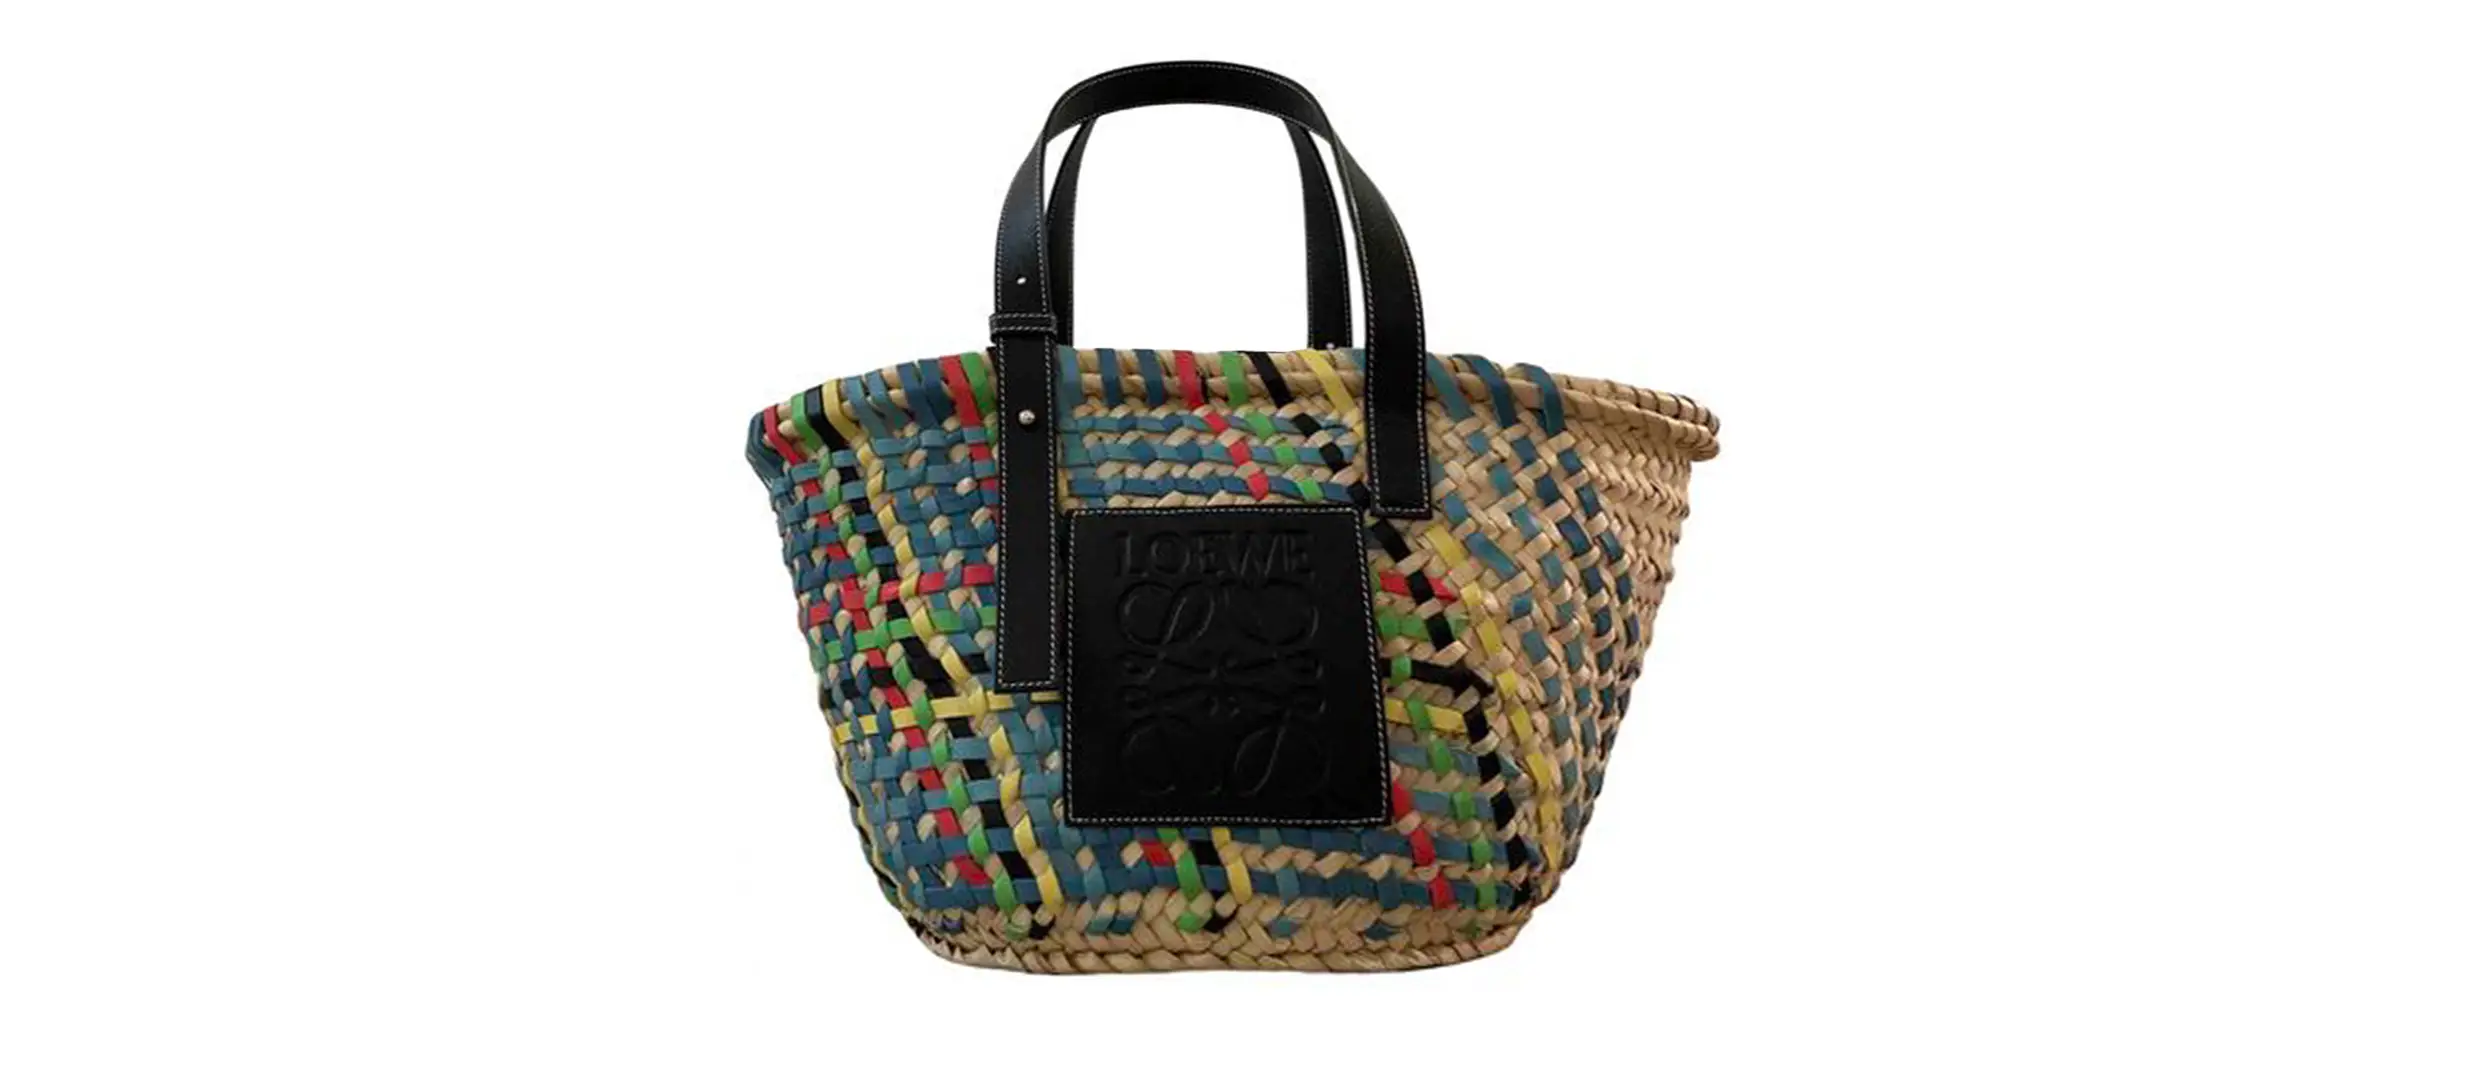 bag-a-main-loewe-basket-bag-multicolor-straw.jpg